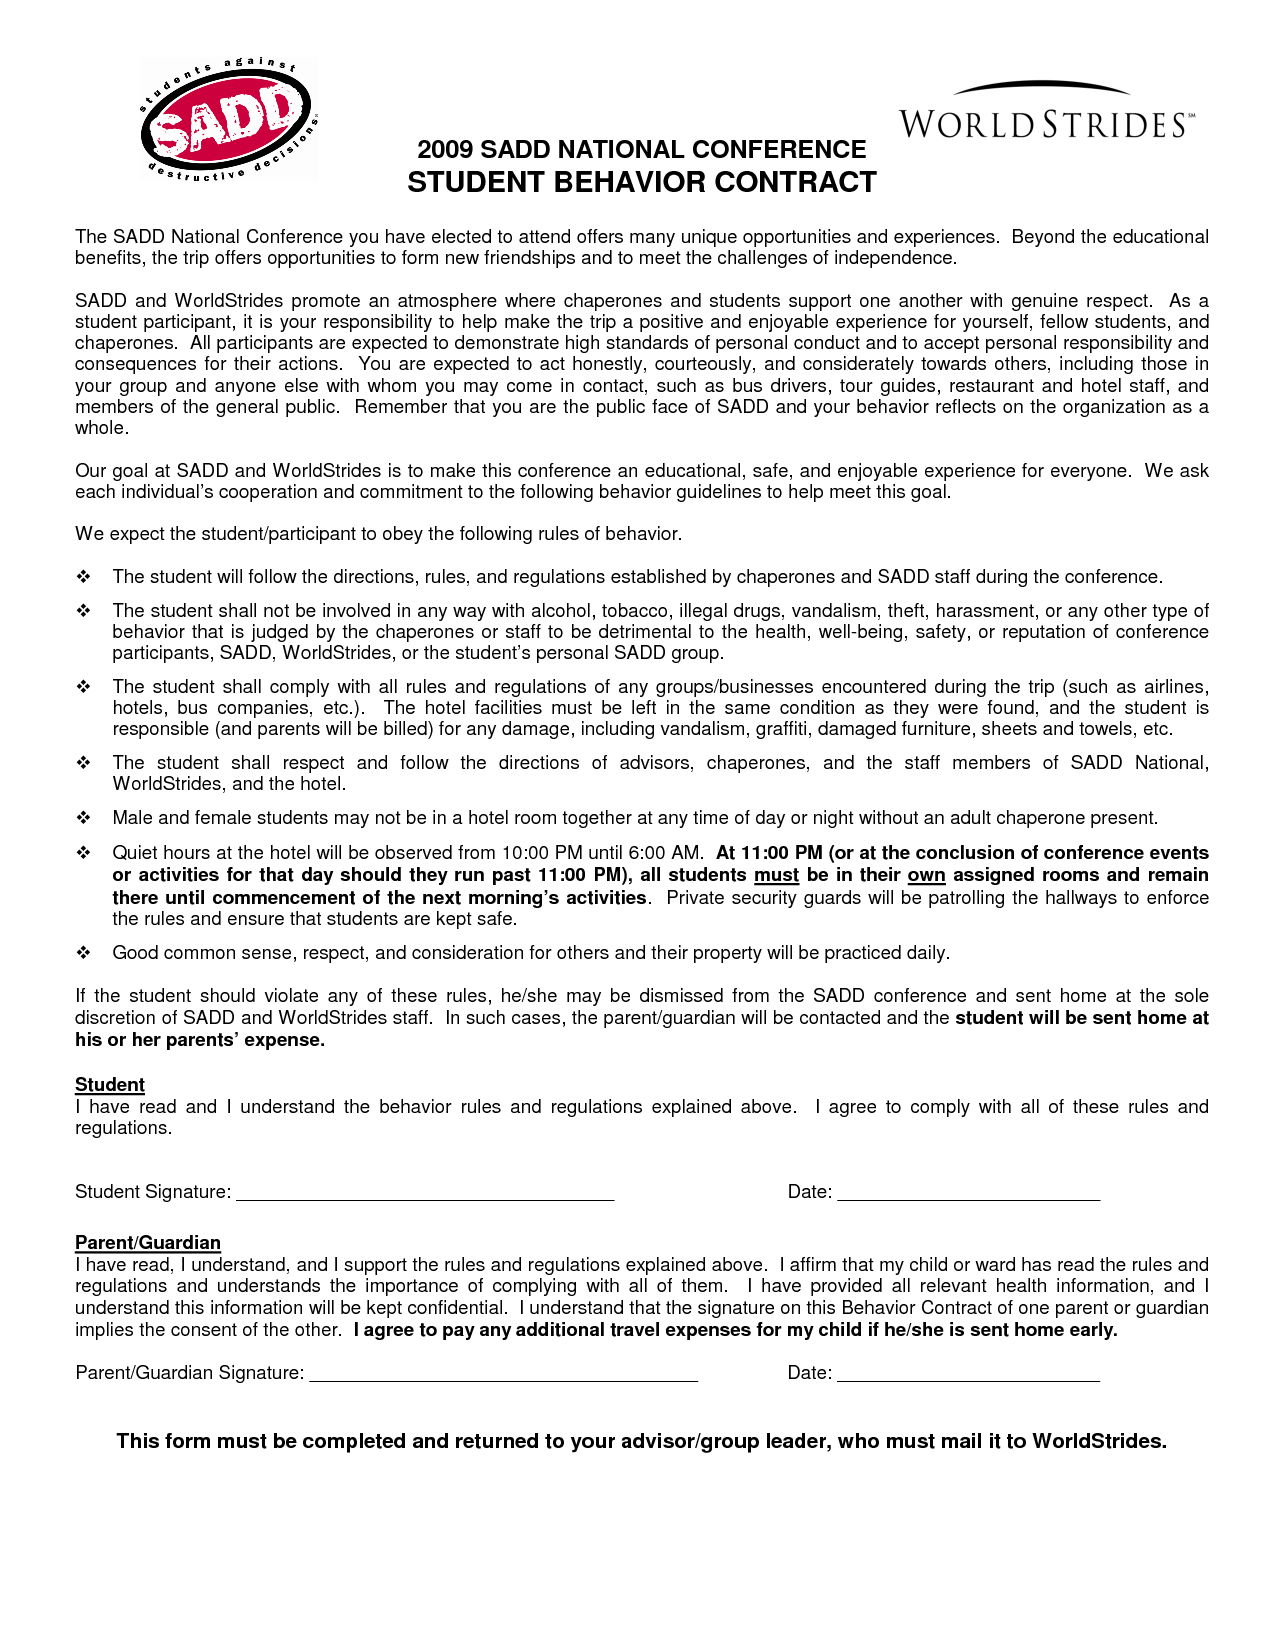 Student Behavior Contract Image